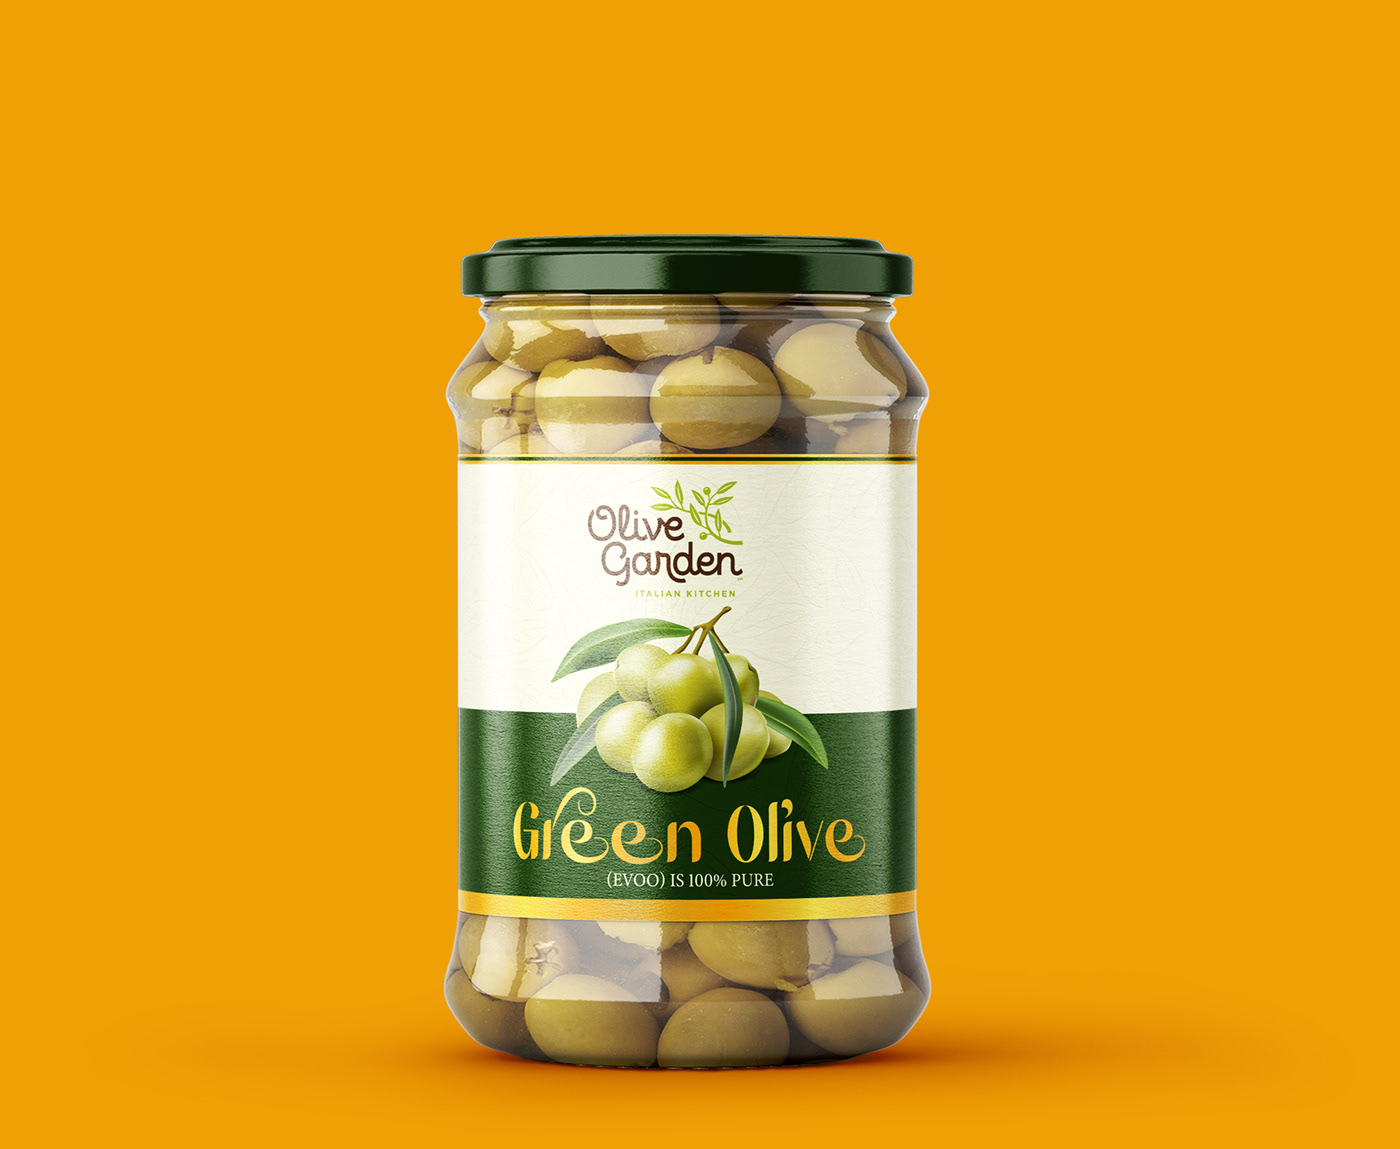 Food  product Packaging product design  brand identity label design Olive jar packaging design jar label design packaging label design